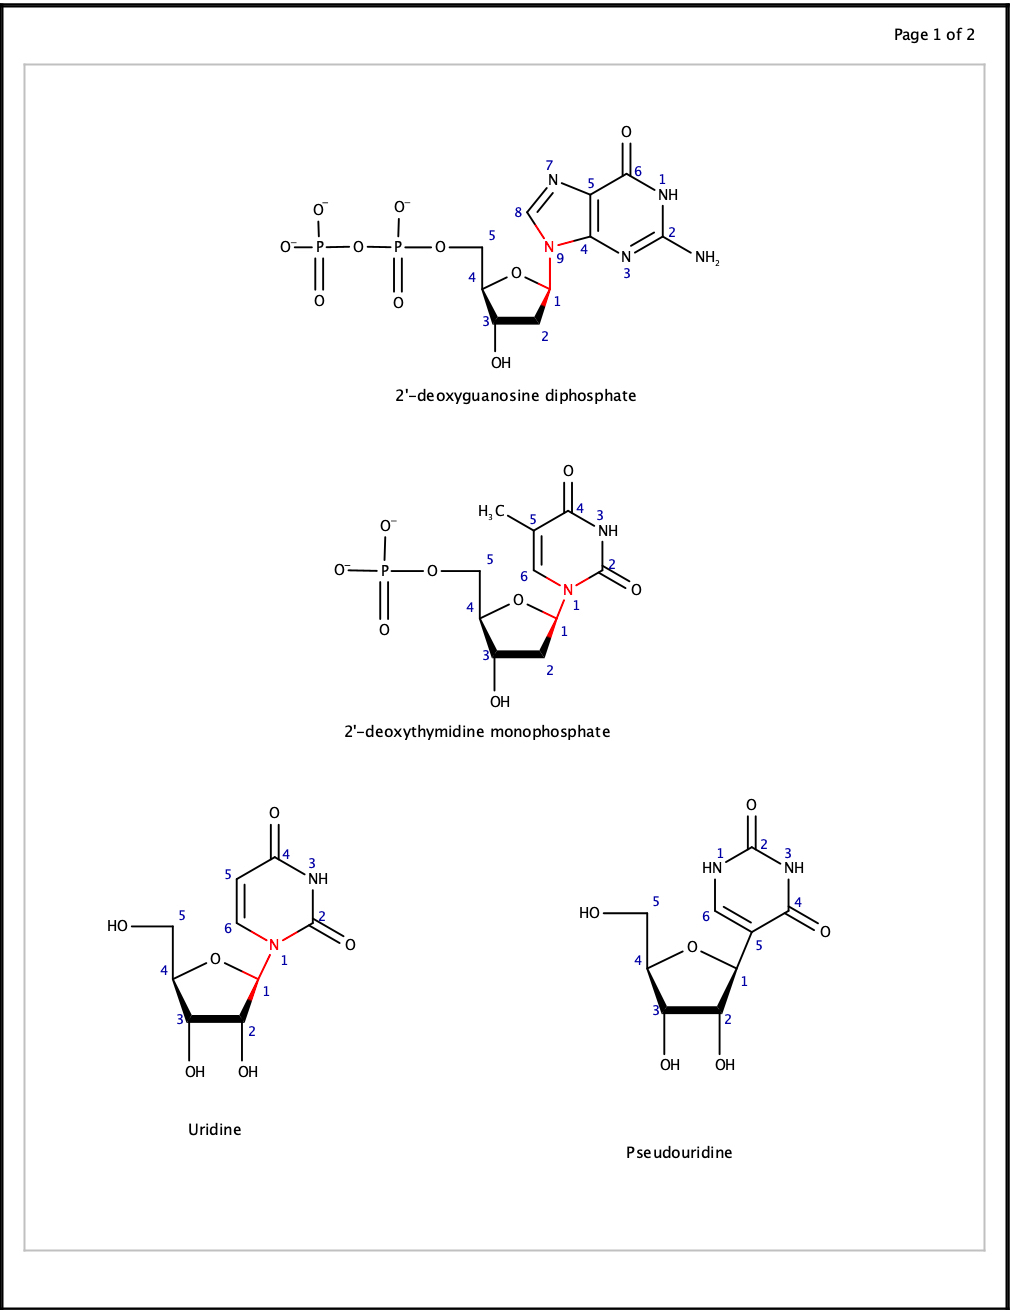 2'-deoxyguanosine diphosphate, 2'-deoxythymidine monophosphate, Uridine, Pseudouridine